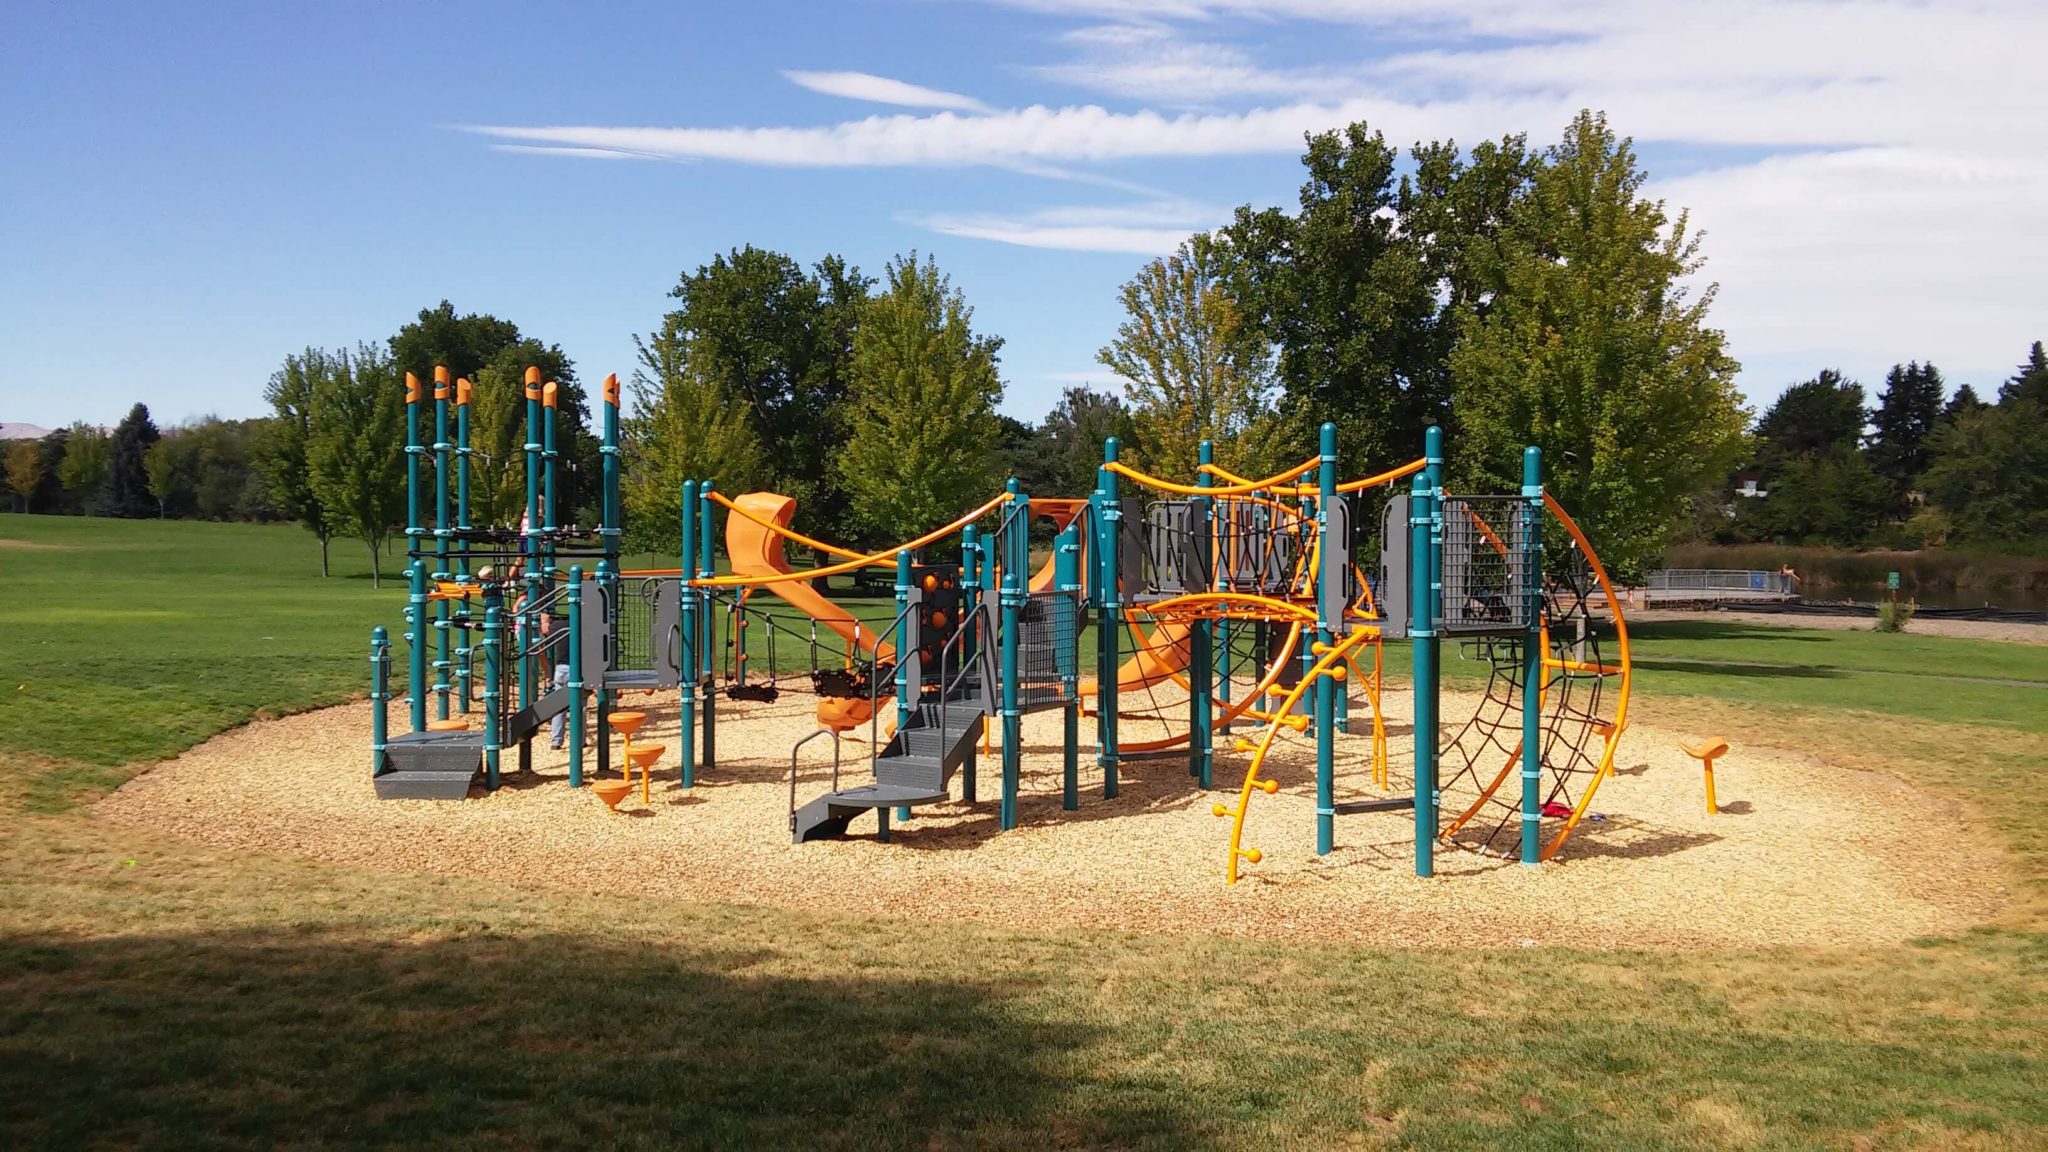 Randall Park Playground